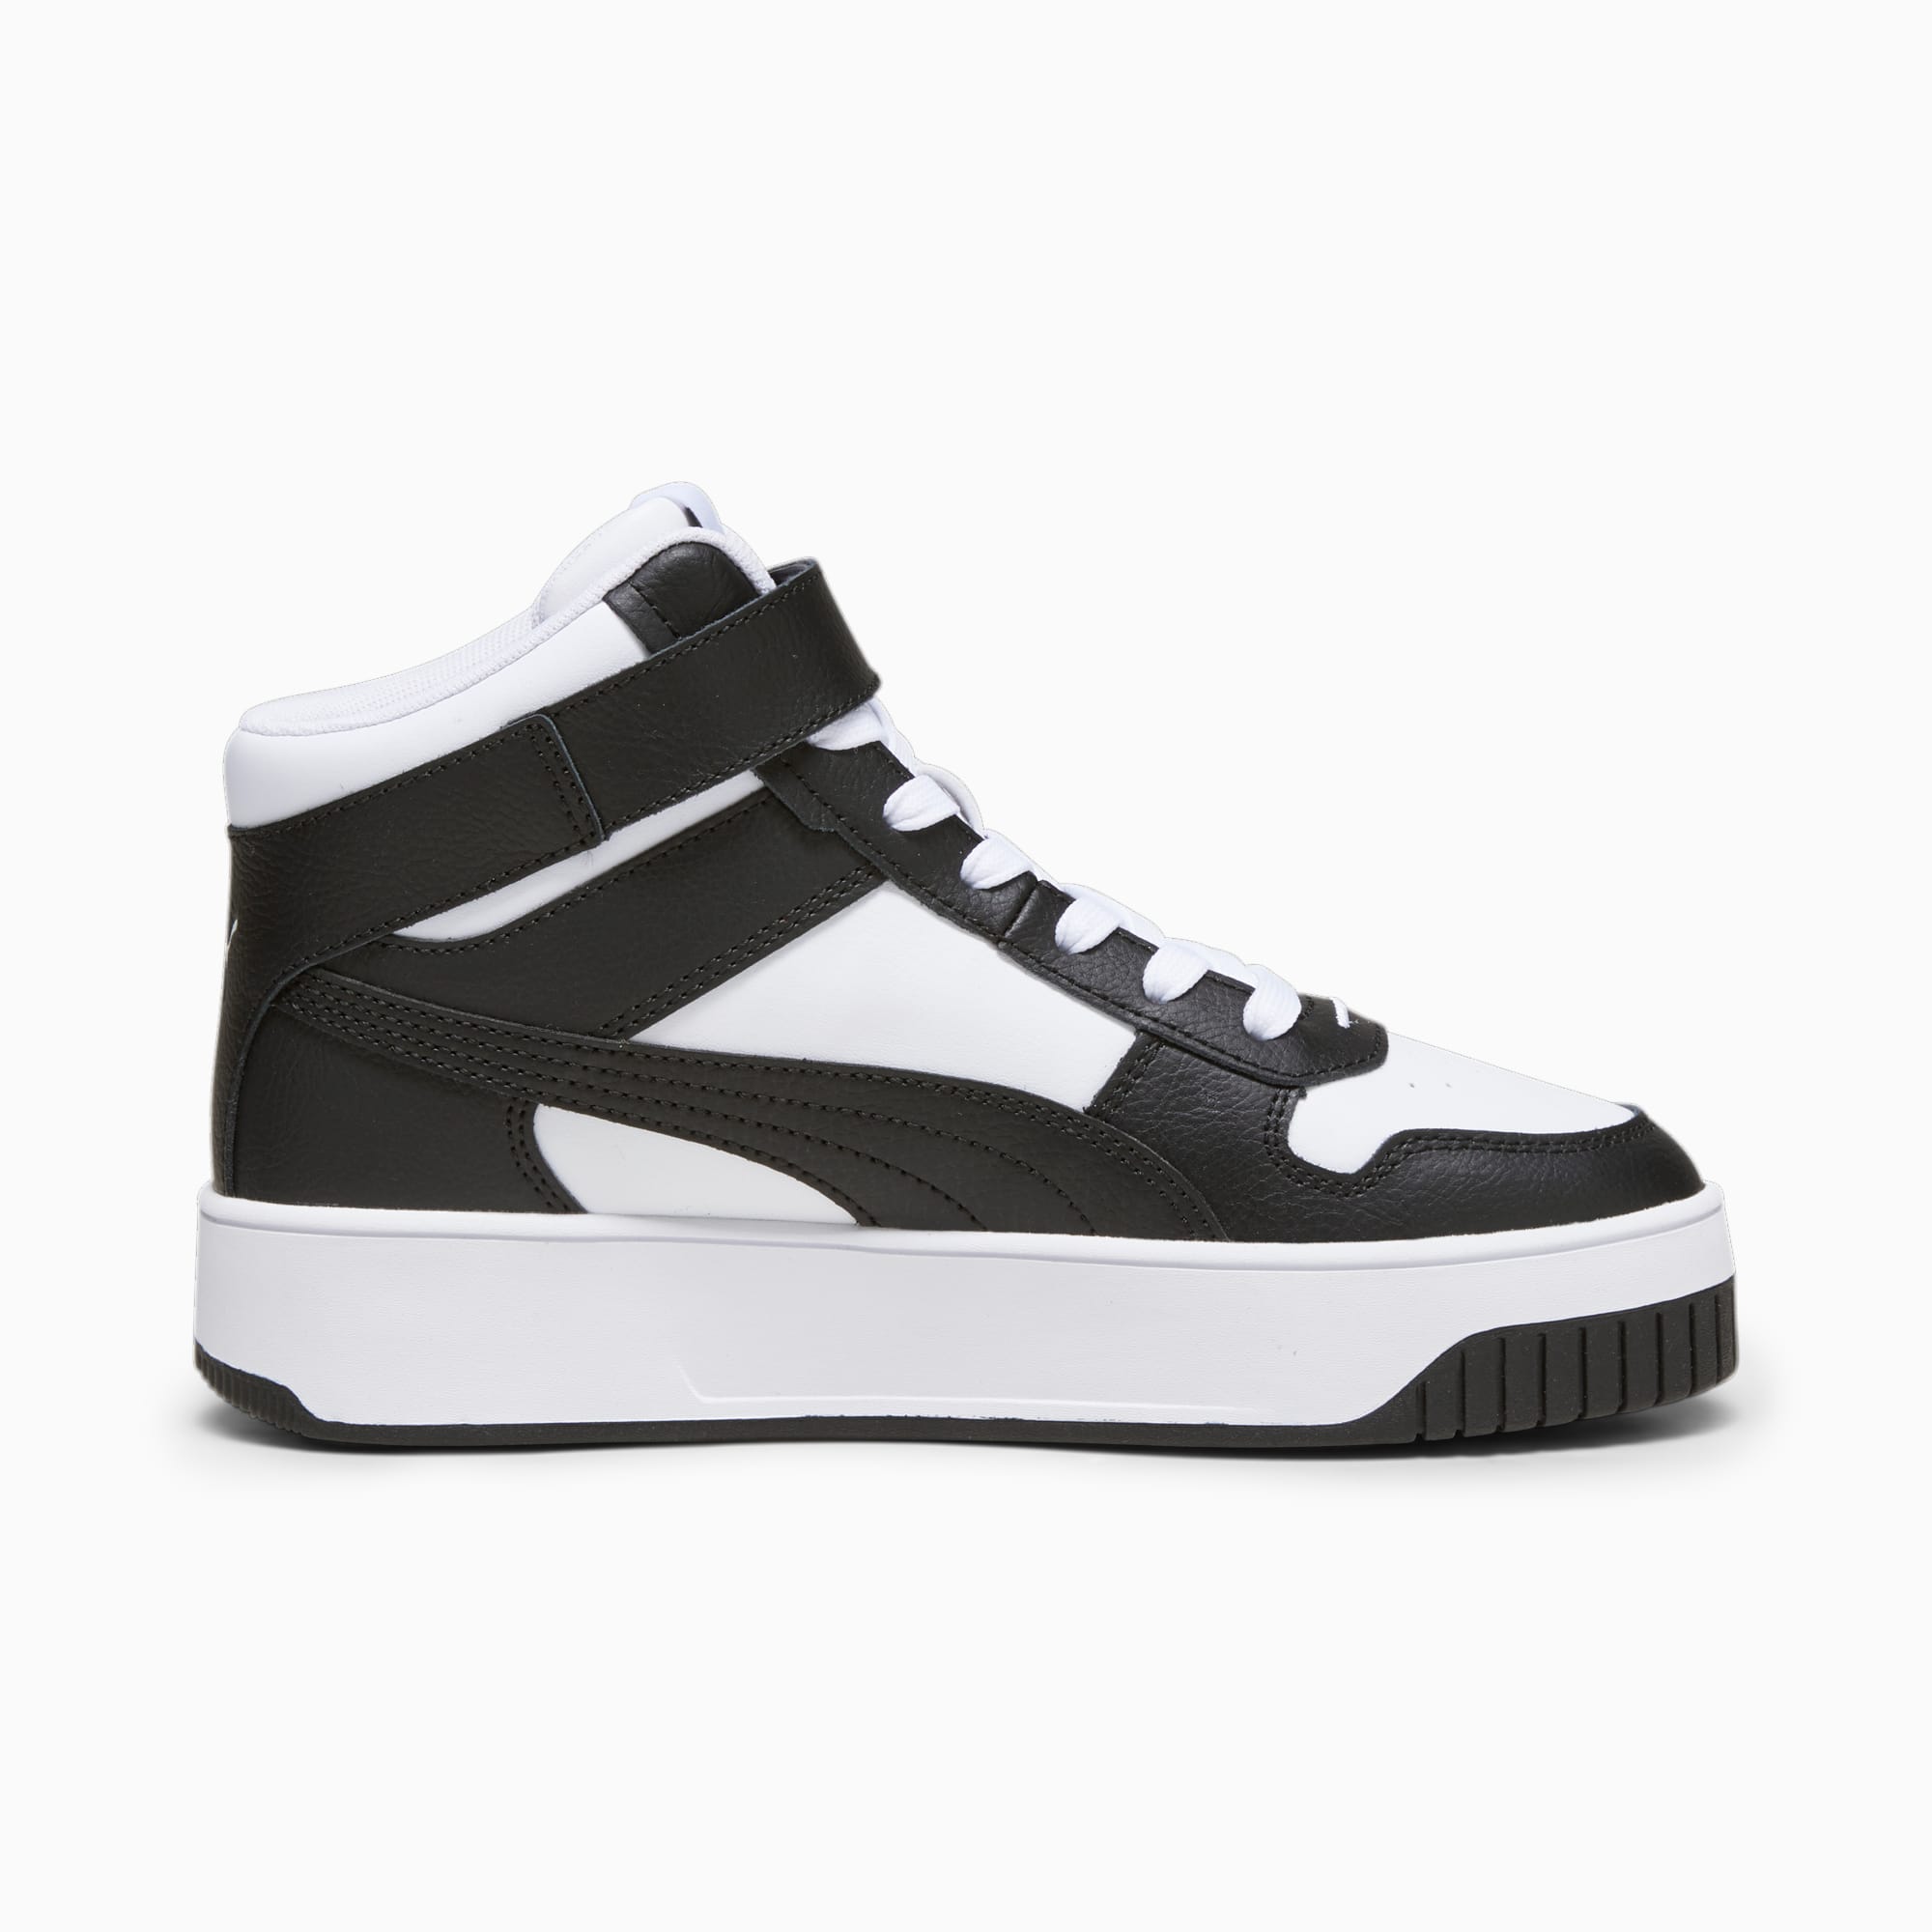 PUMA Carina Street Mid Sneakers Damen Schuhe, Weiß/Schwarz, Größe: 35.5, Schuhe